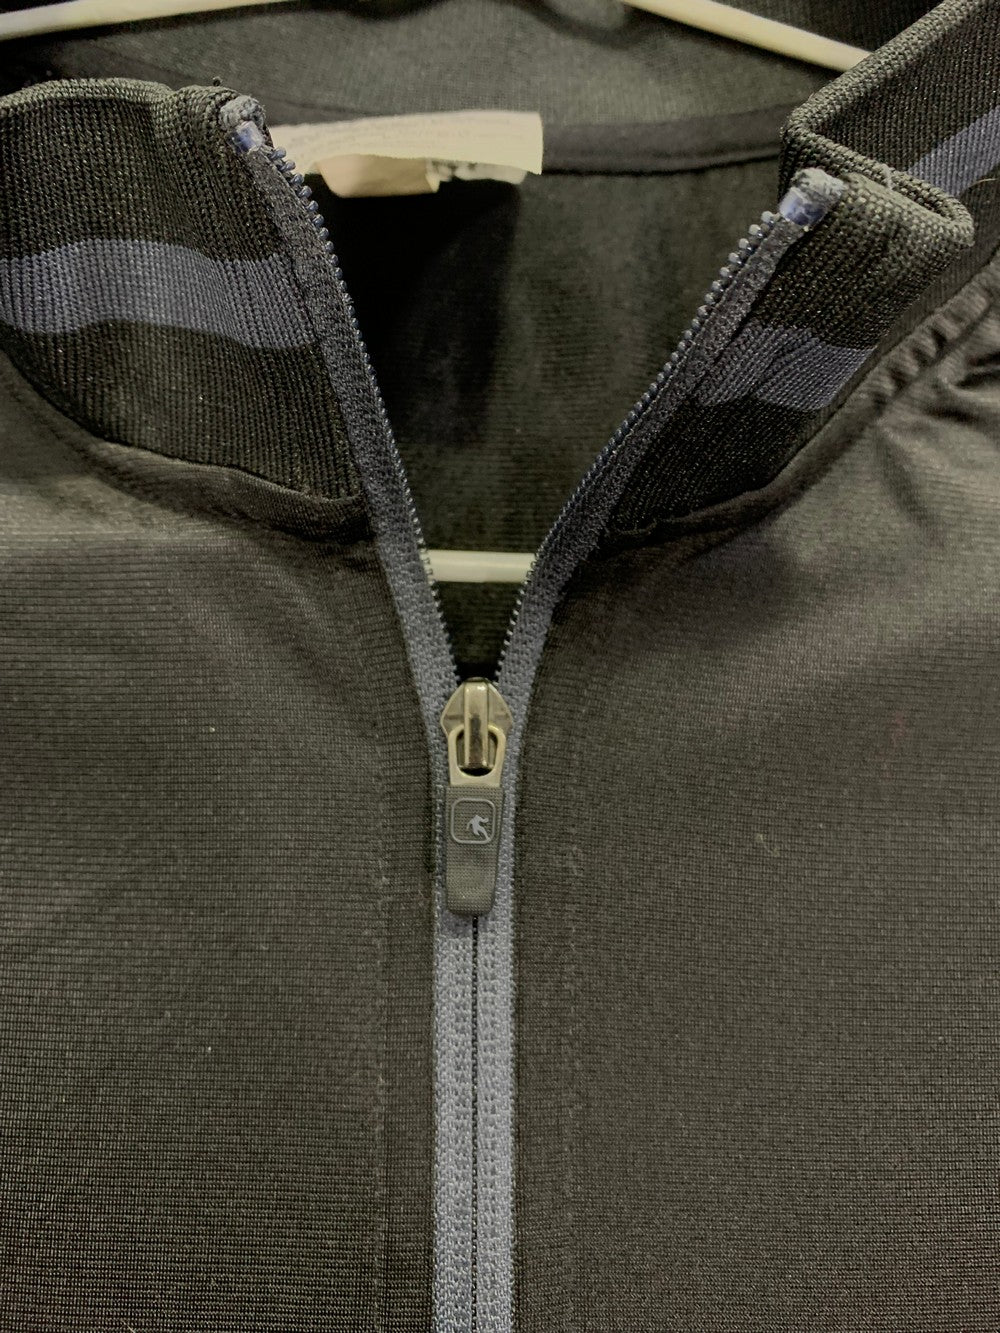 AND1 Branded Original Sports Collar Zipper For Men